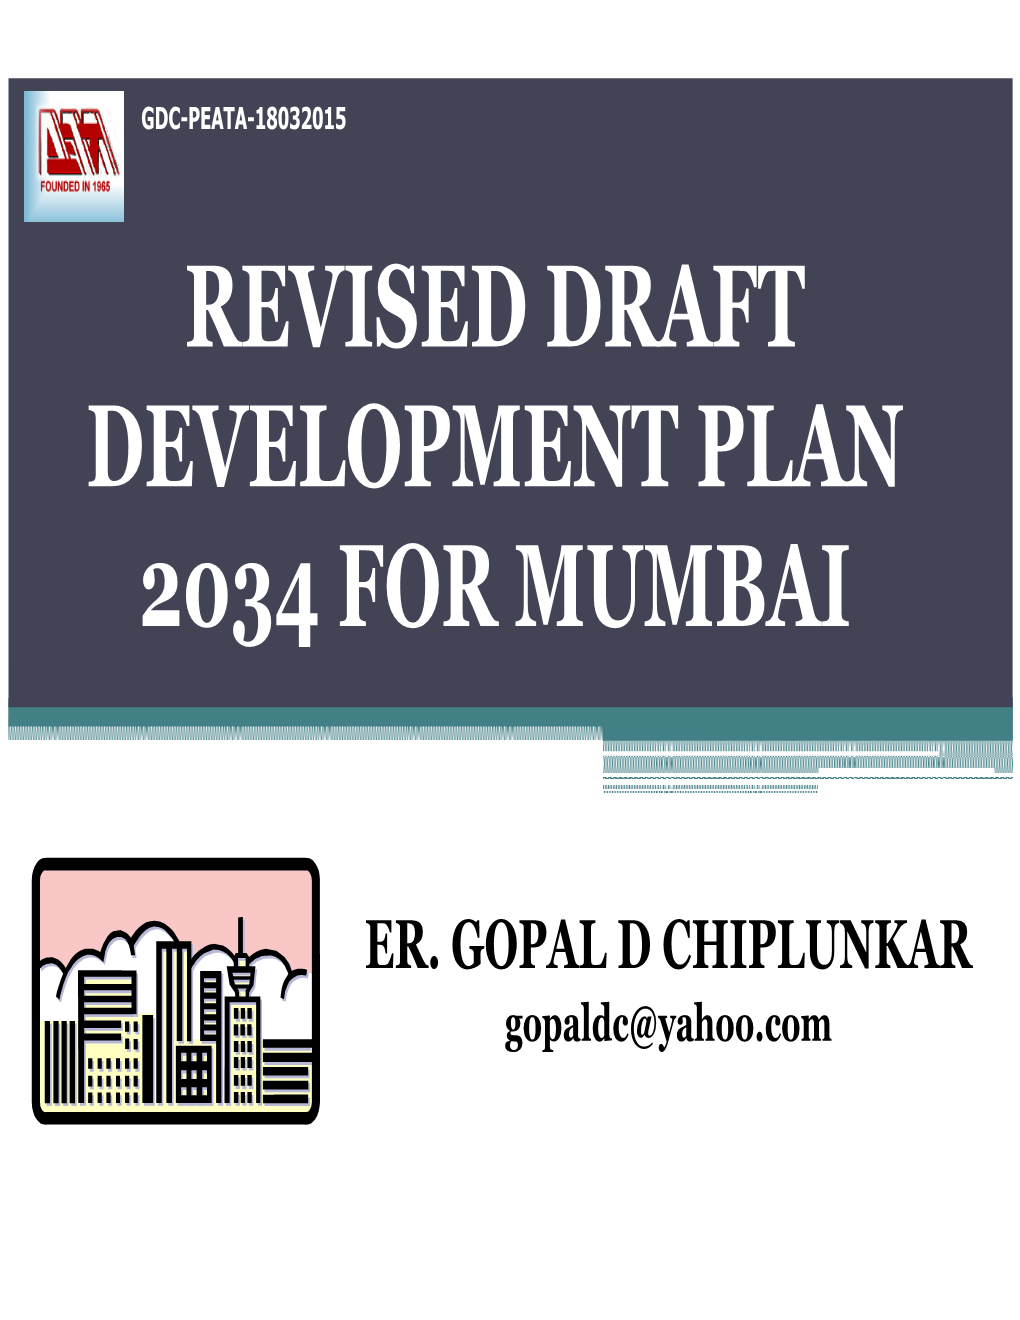 Revised Draft Development Plan 2034 for Mumbai